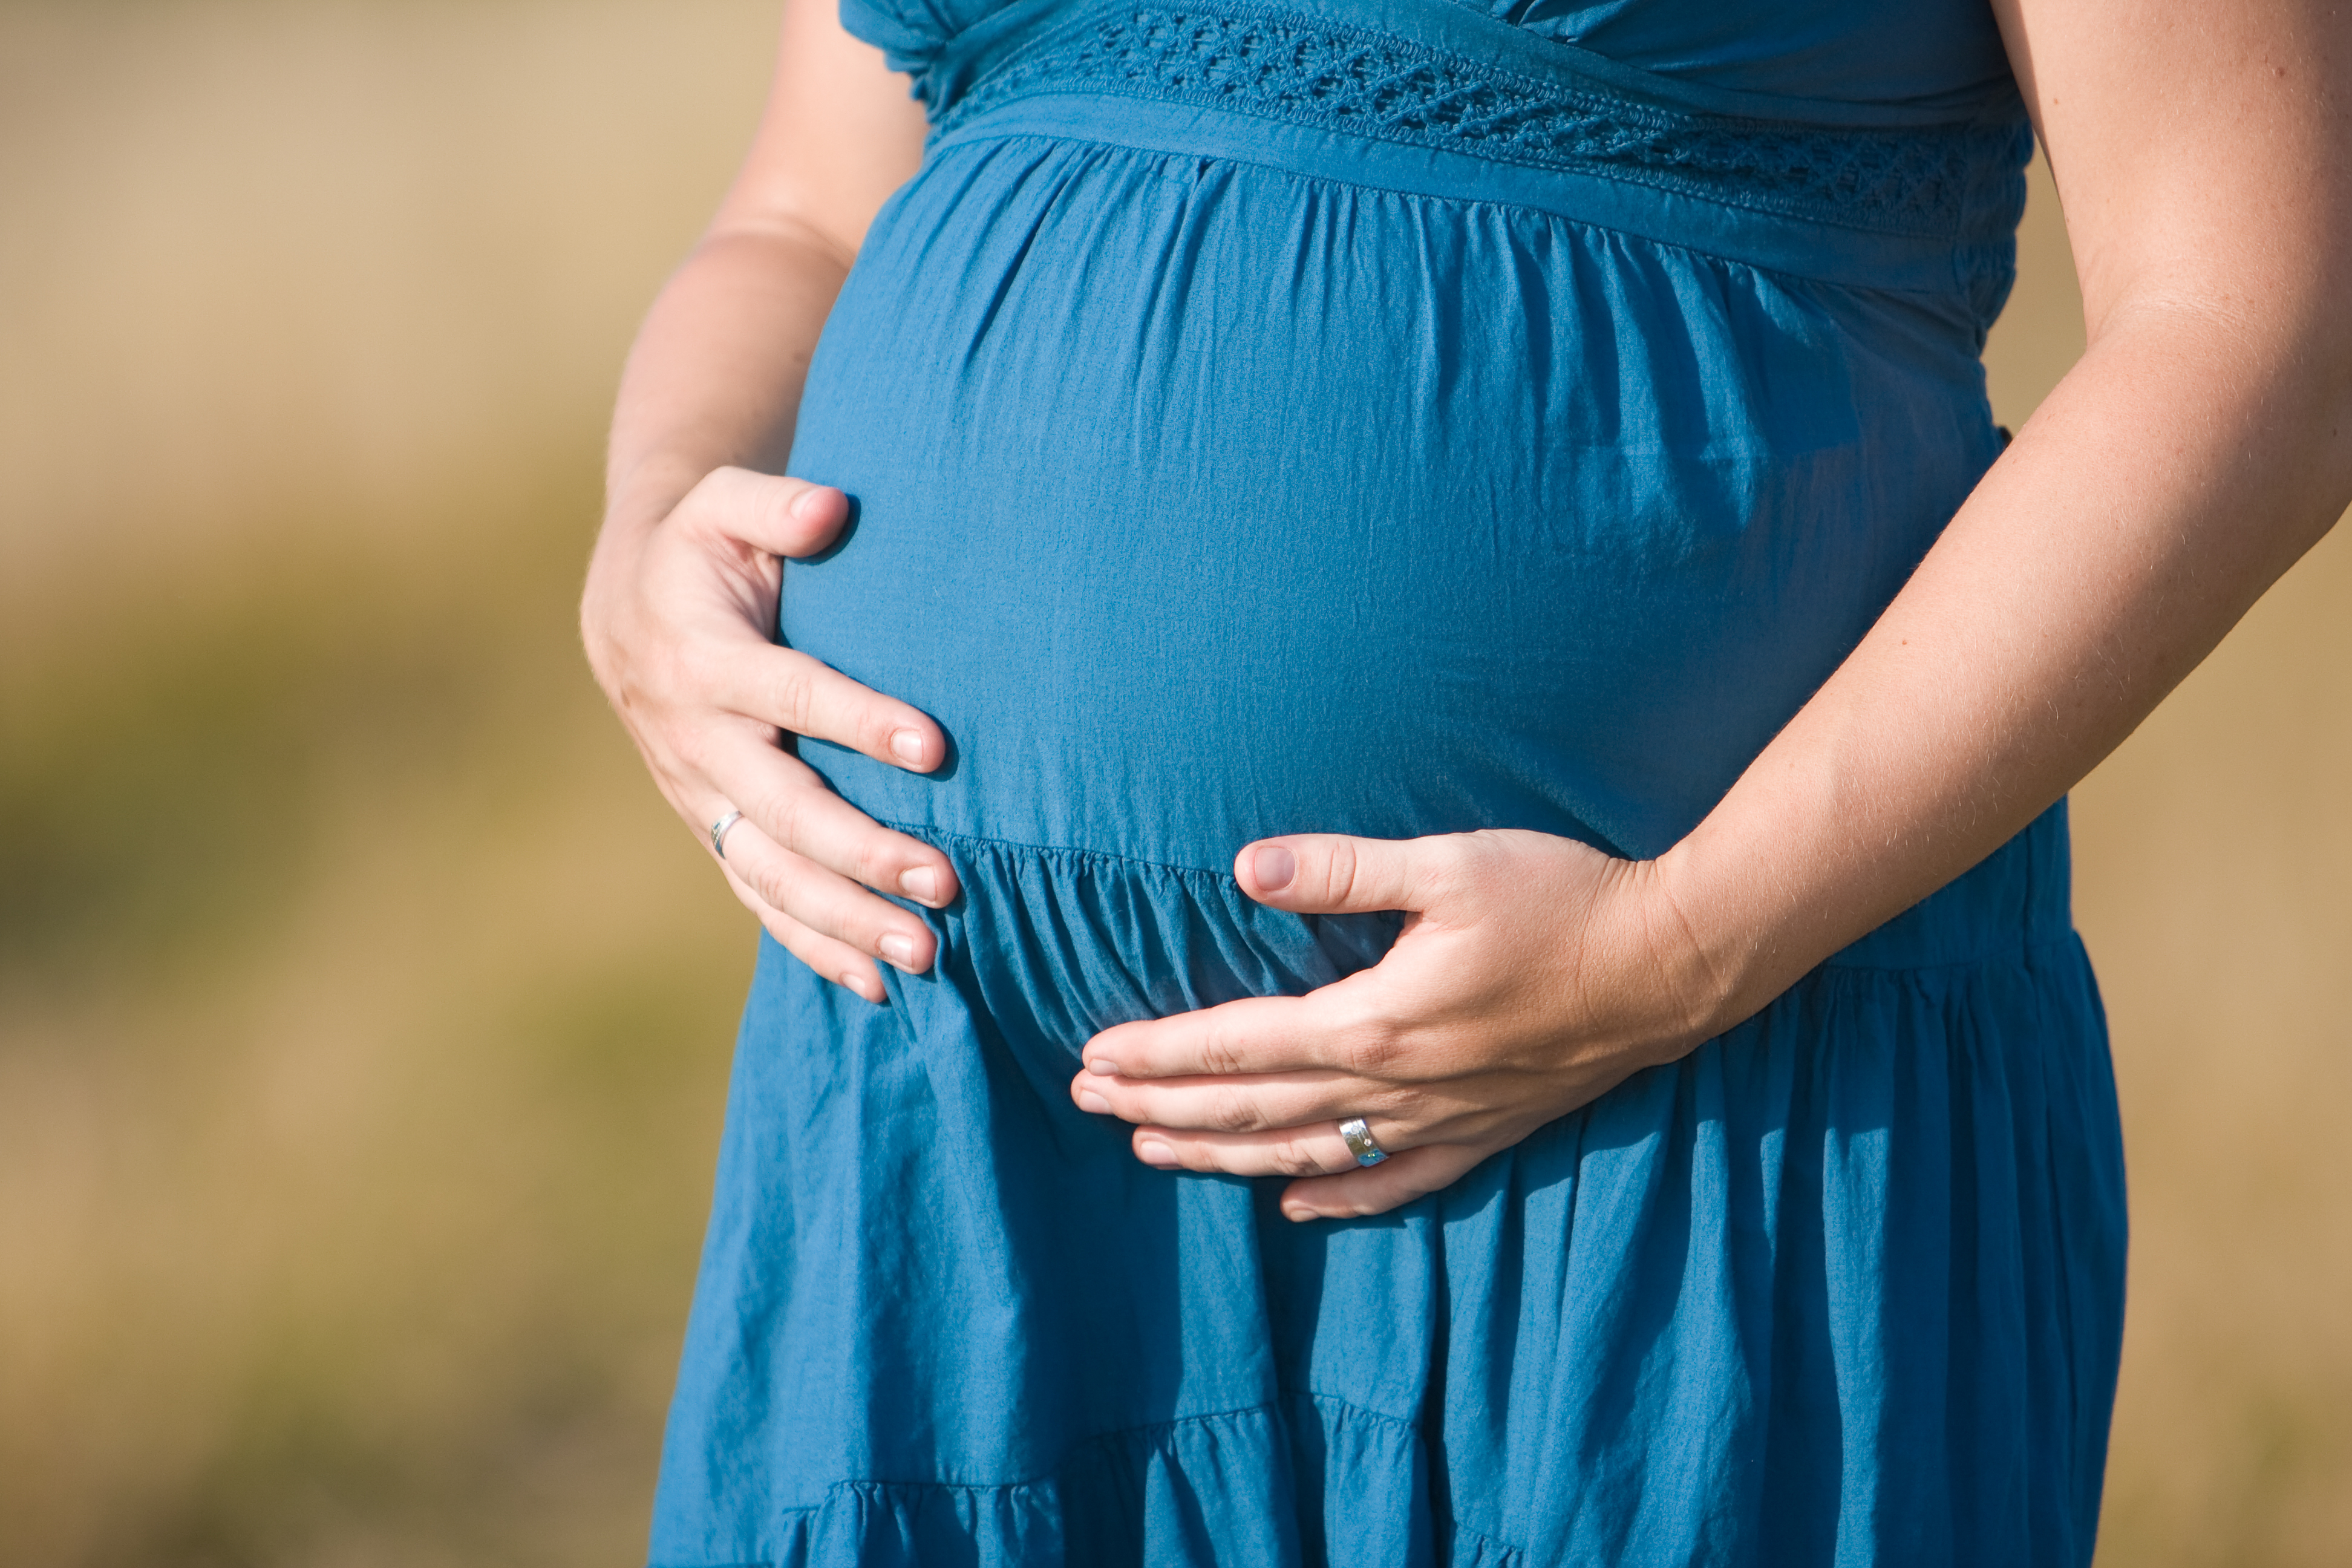 Study highlights heart disease risk for pregnant women